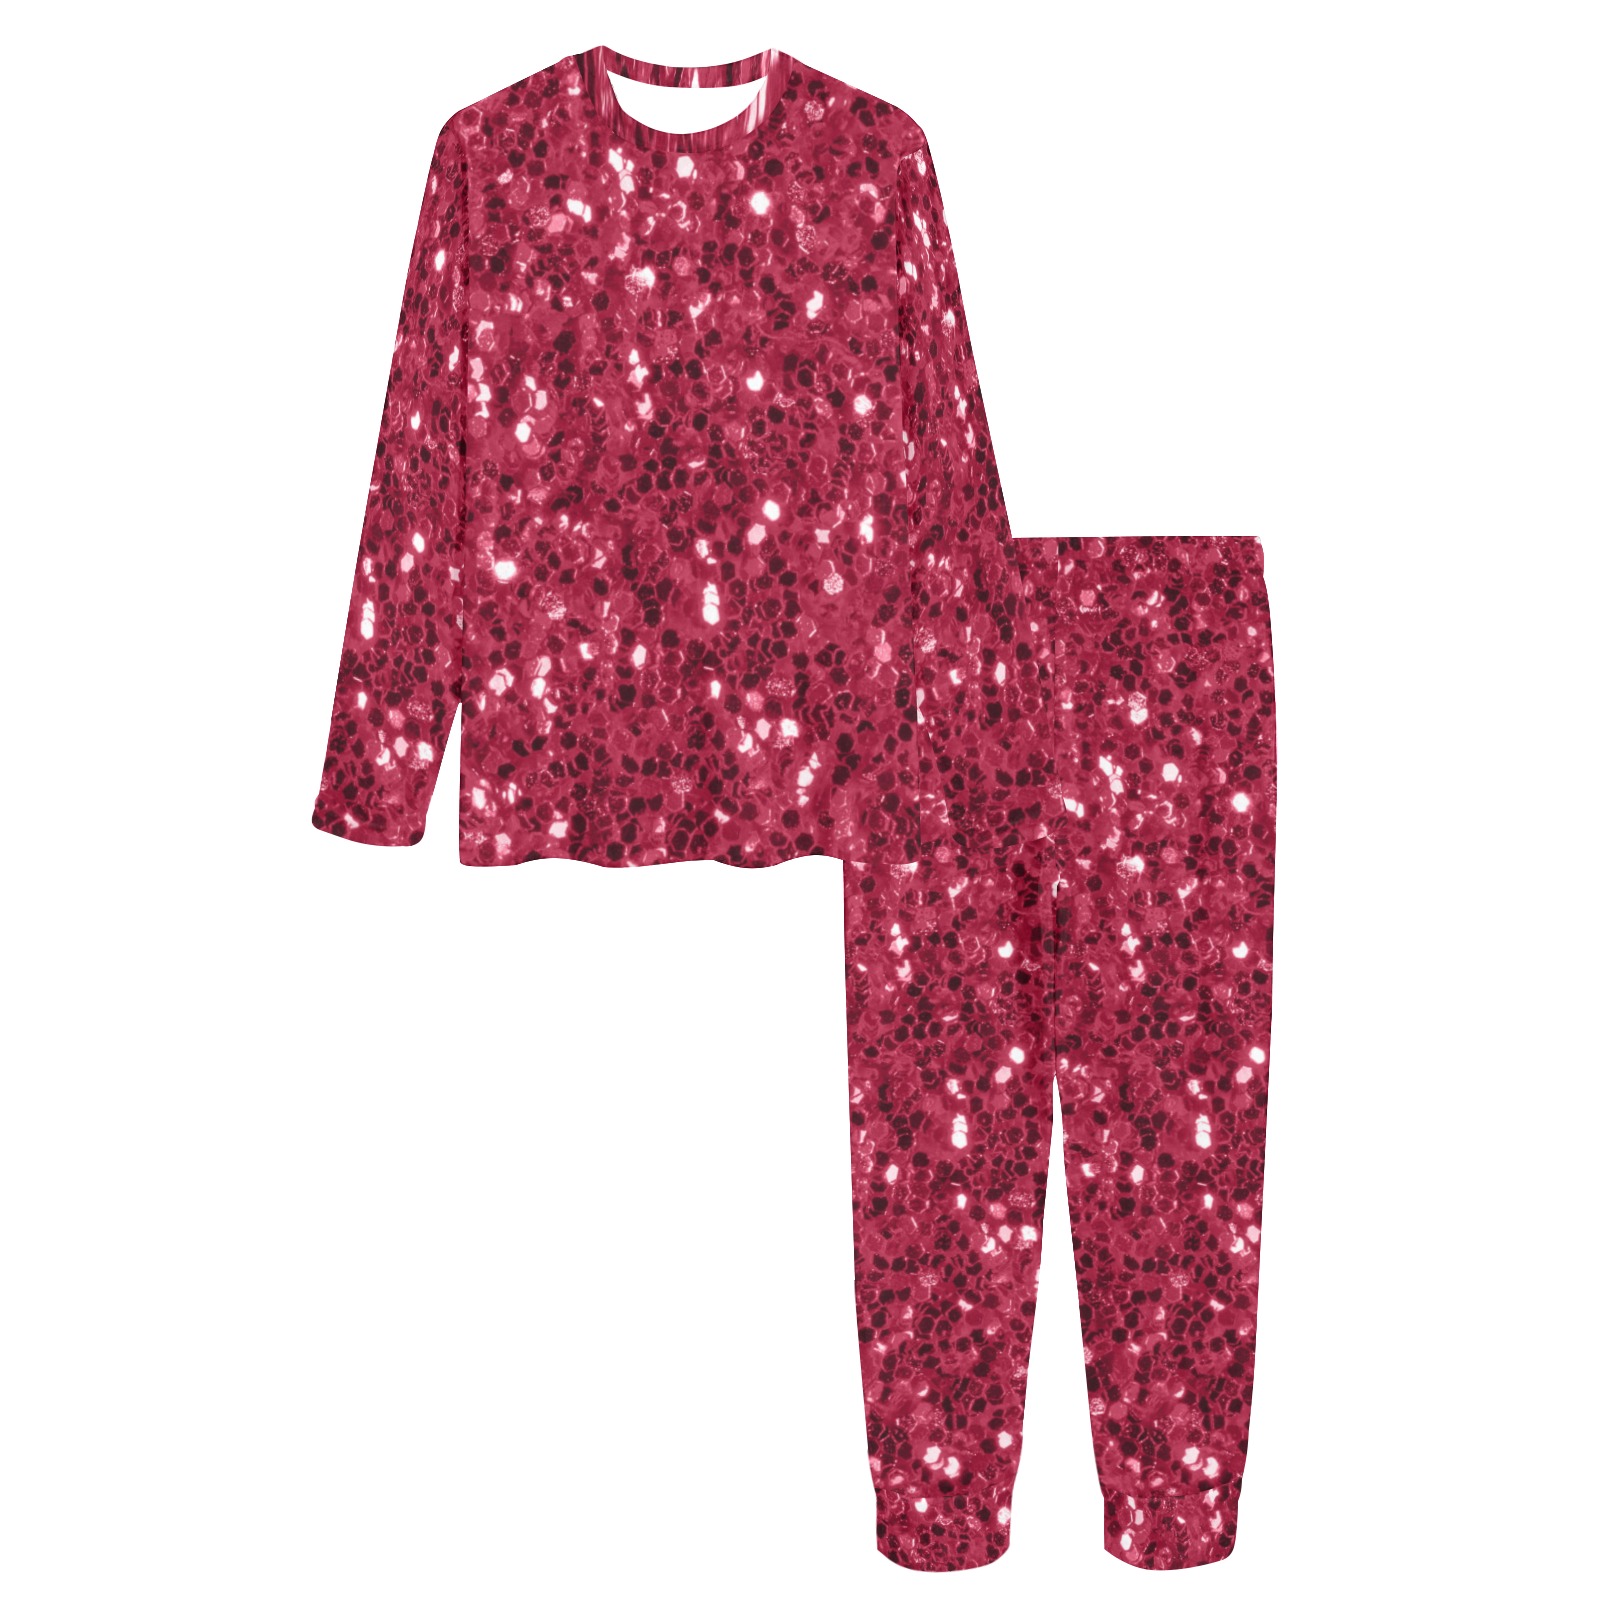 Magenta dark pink red faux sparkles glitter Women's All Over Print Pajama Set